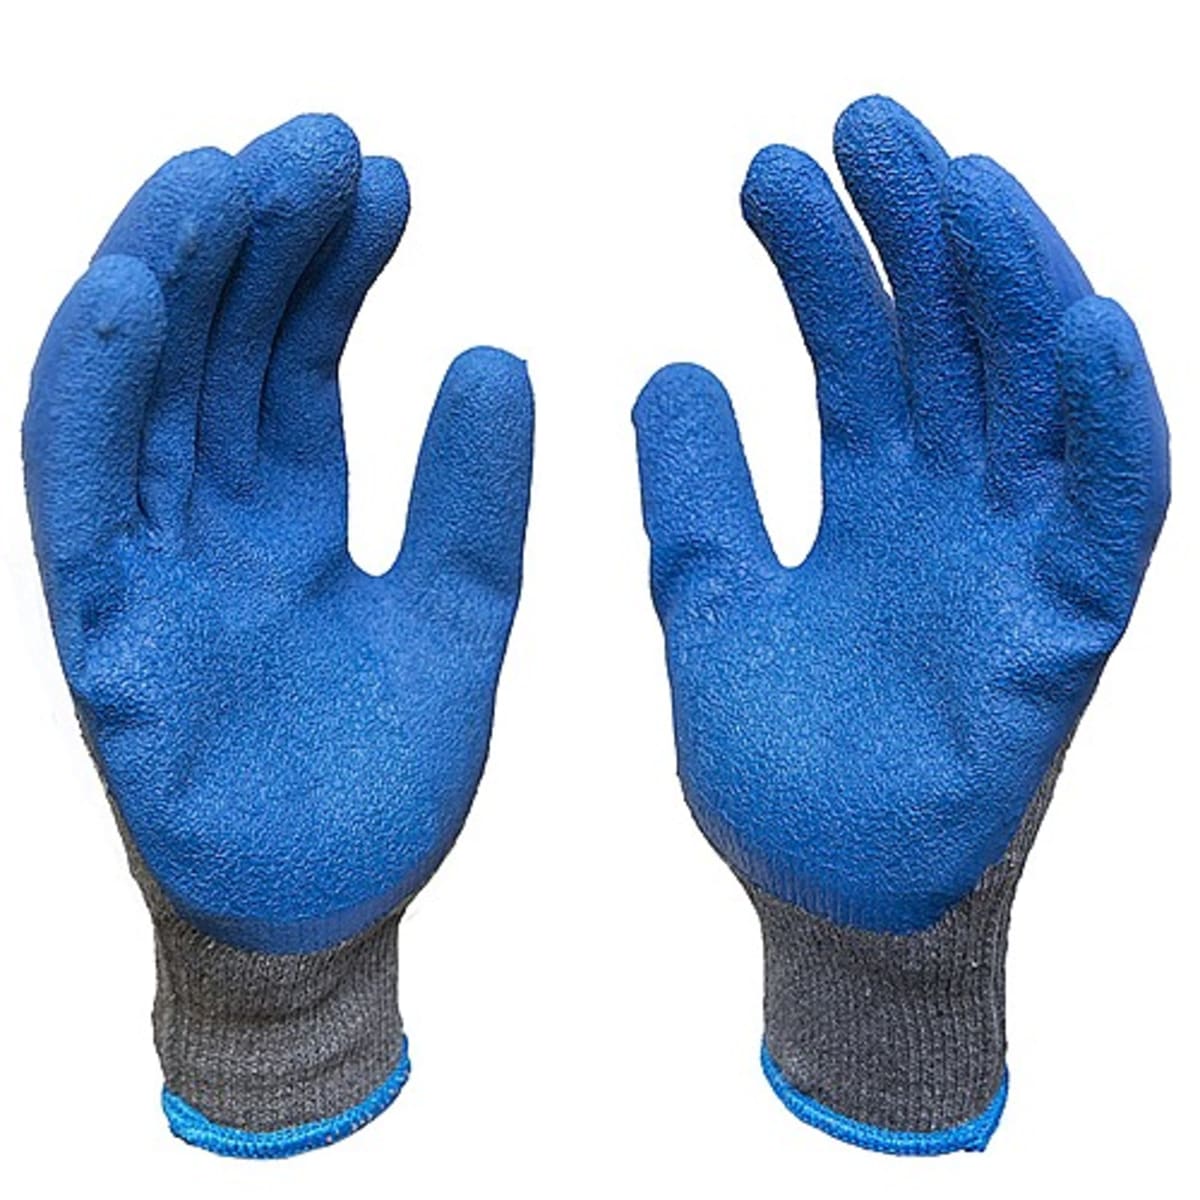 Multipurpose Safety Hand Gloves - 2 Pair